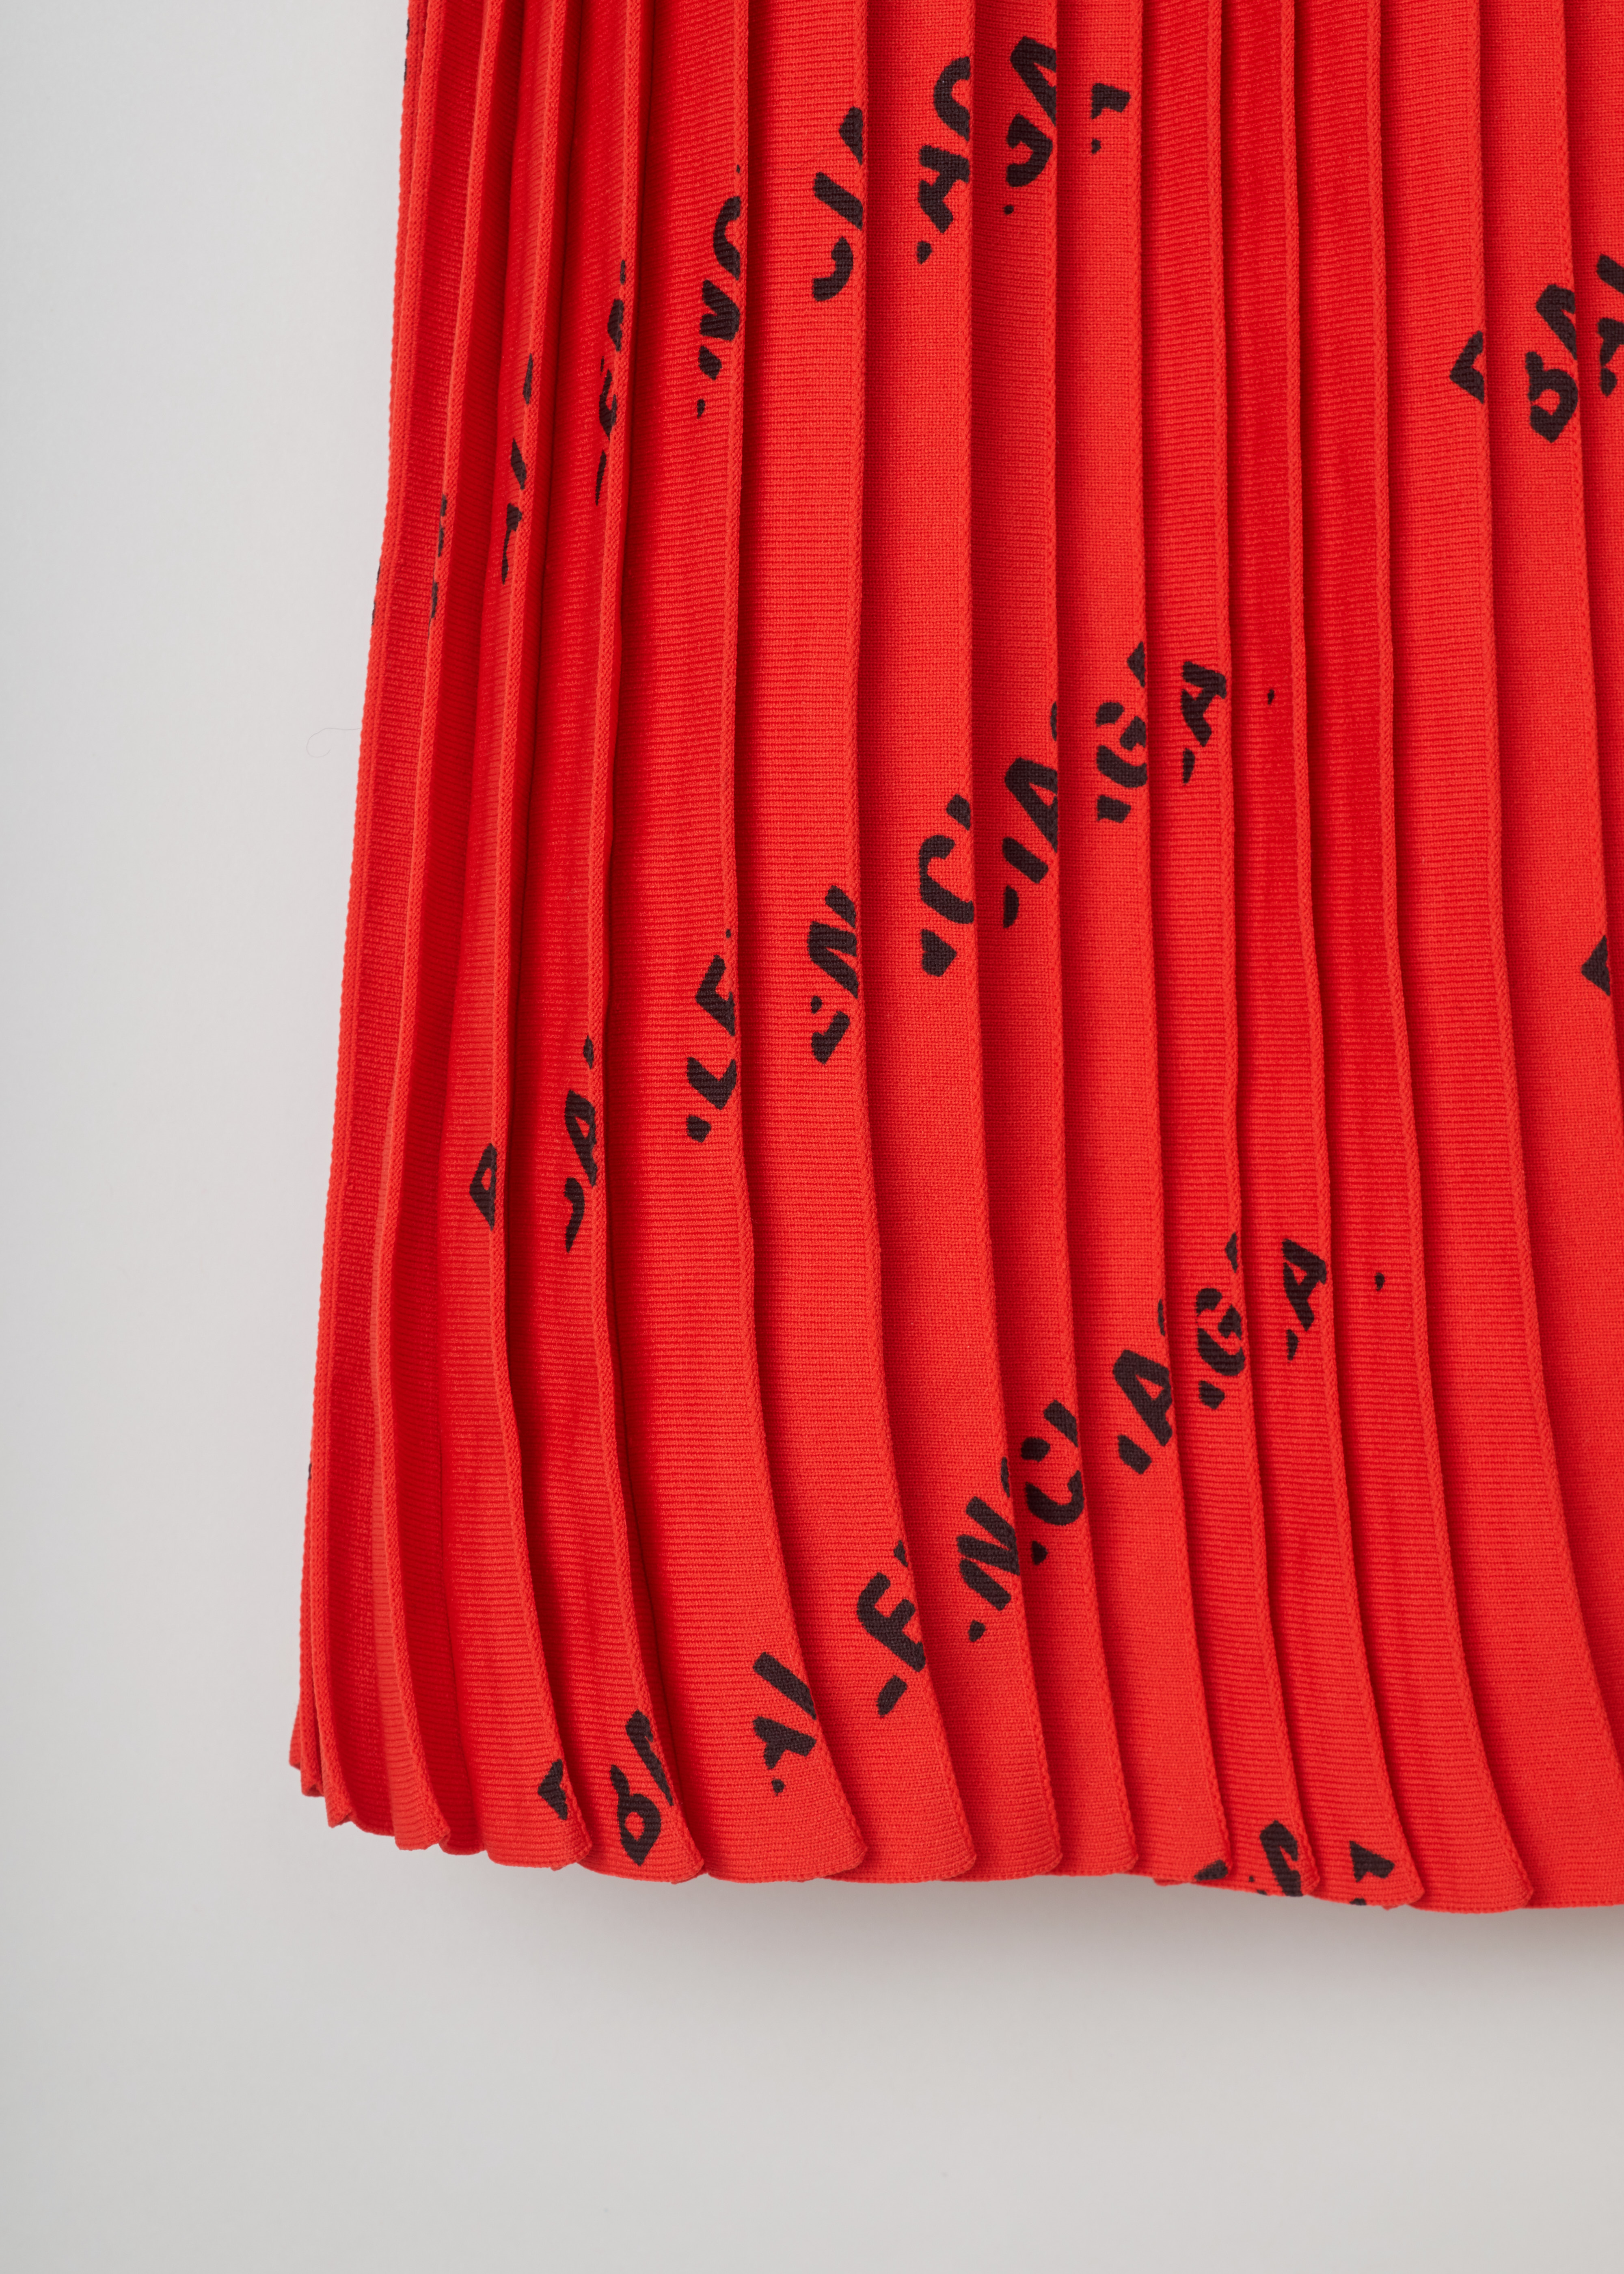 Balenciaga Plissé skirt with logo pattern 570845_T6140_6282 red detail. Midi length plissé skirt with an all over logo print of the Balenciaga logo and an elasticated waistband.